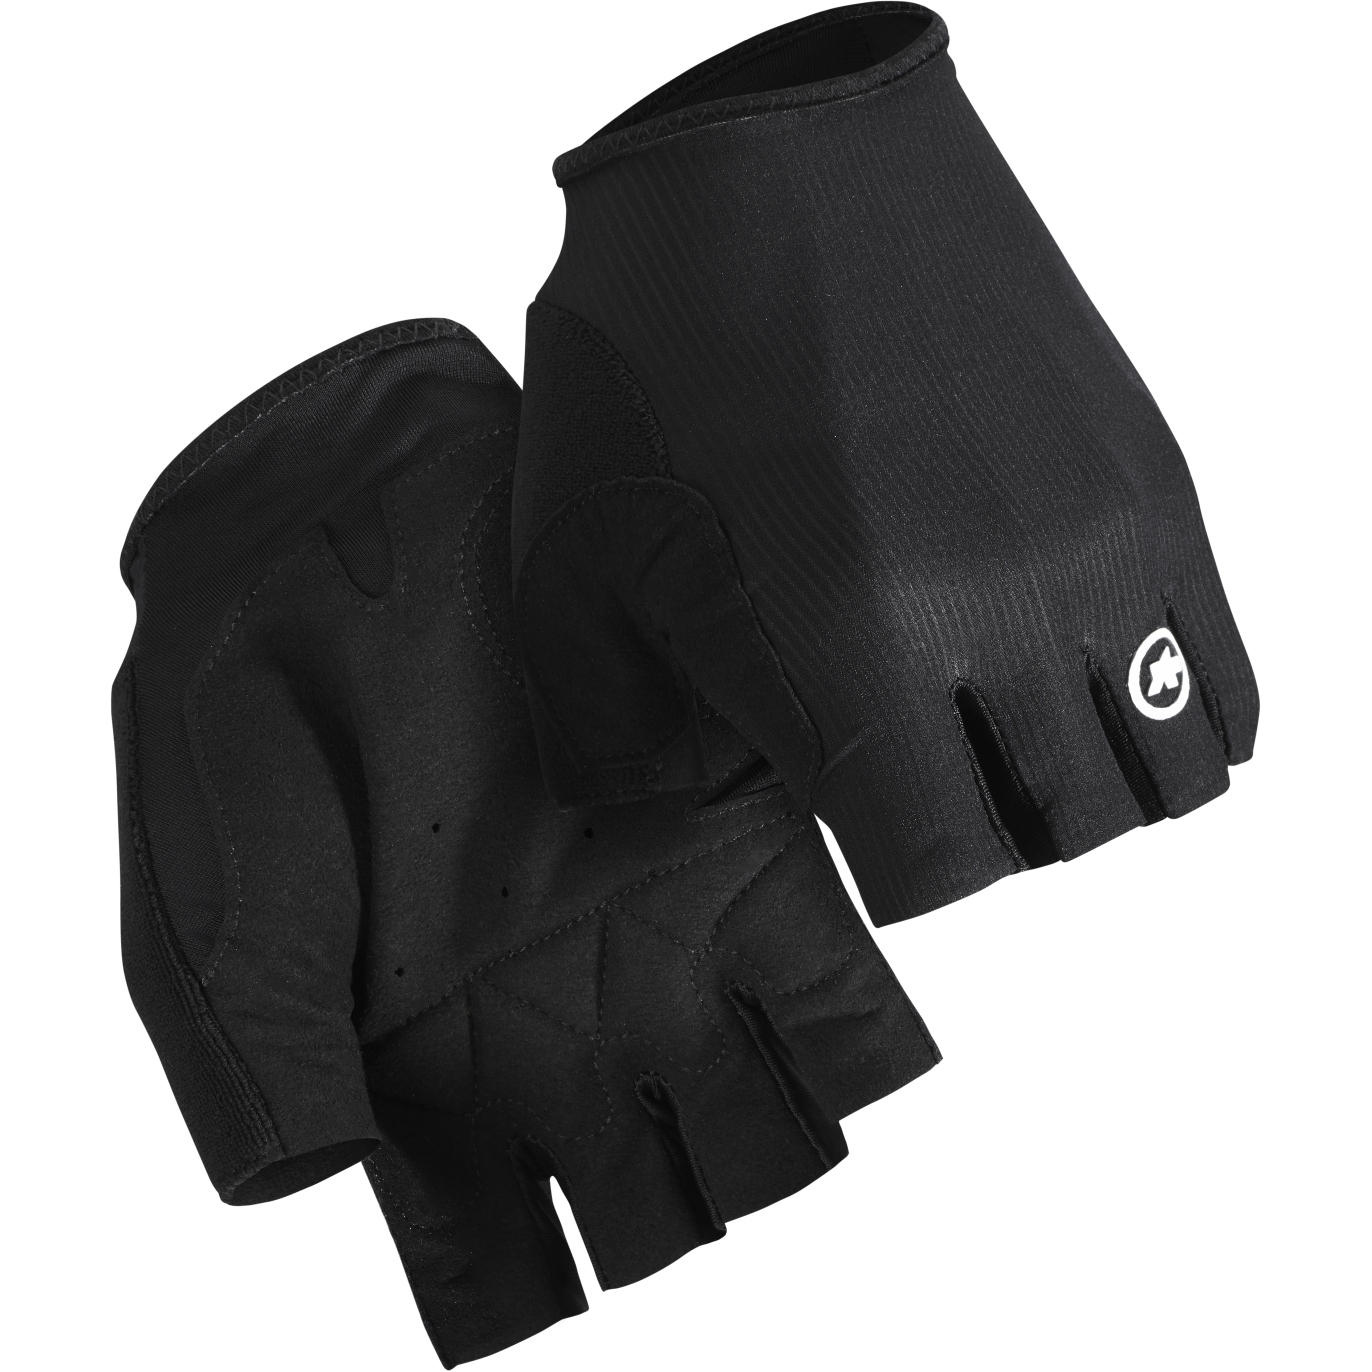 Produktbild von Assos RS TARGA Kurzfinger-Handschuhe - schwarz